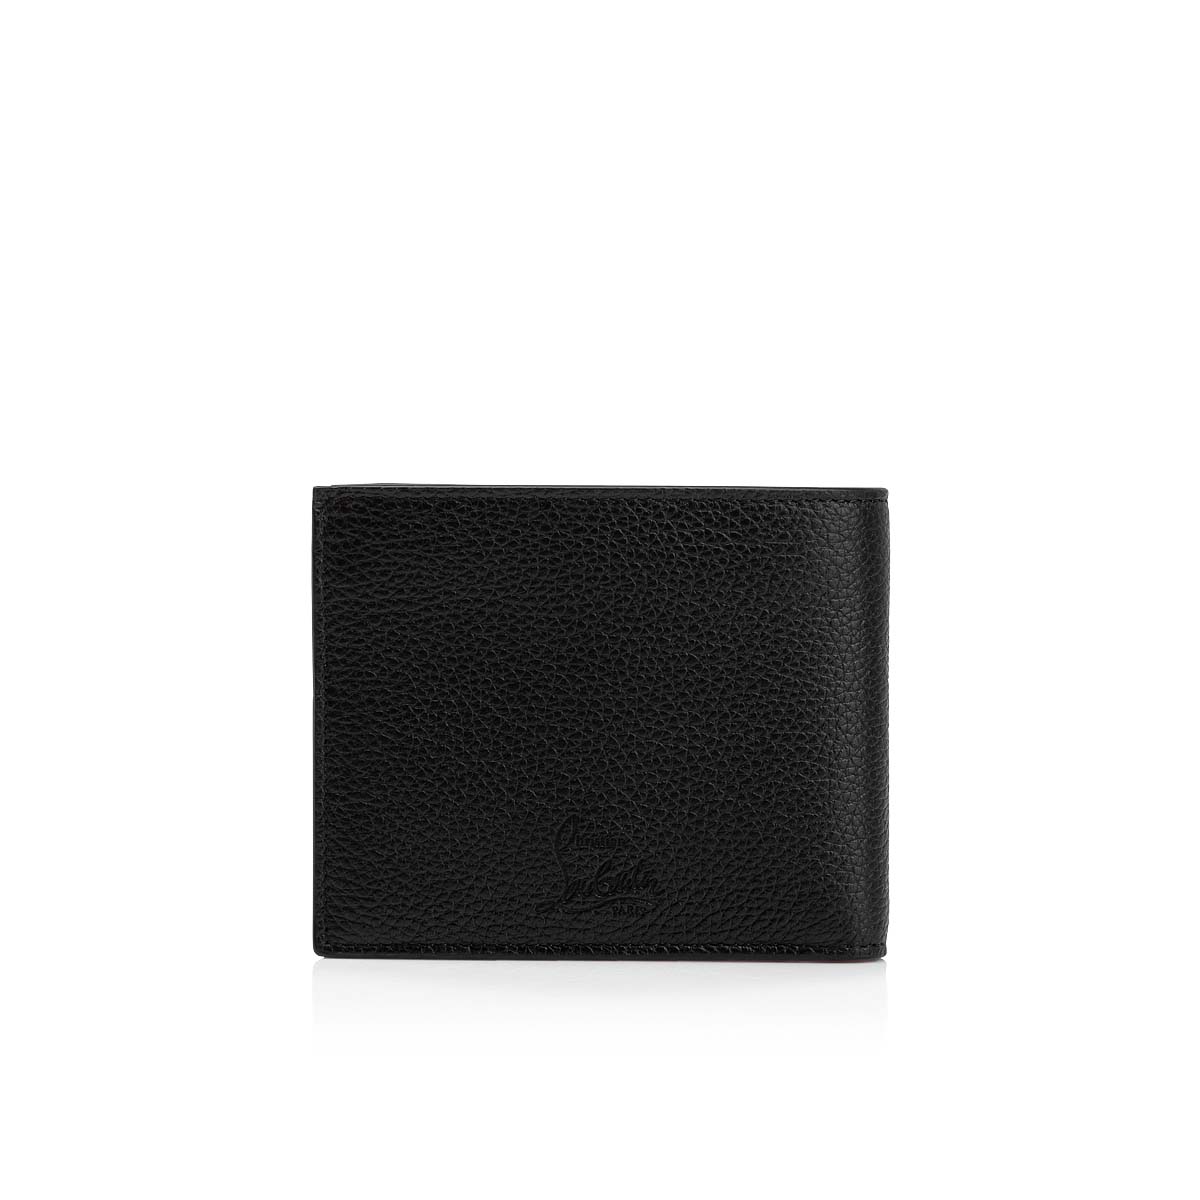 Louis Vuitton CL√âMENCE Wallet, Red, One Size